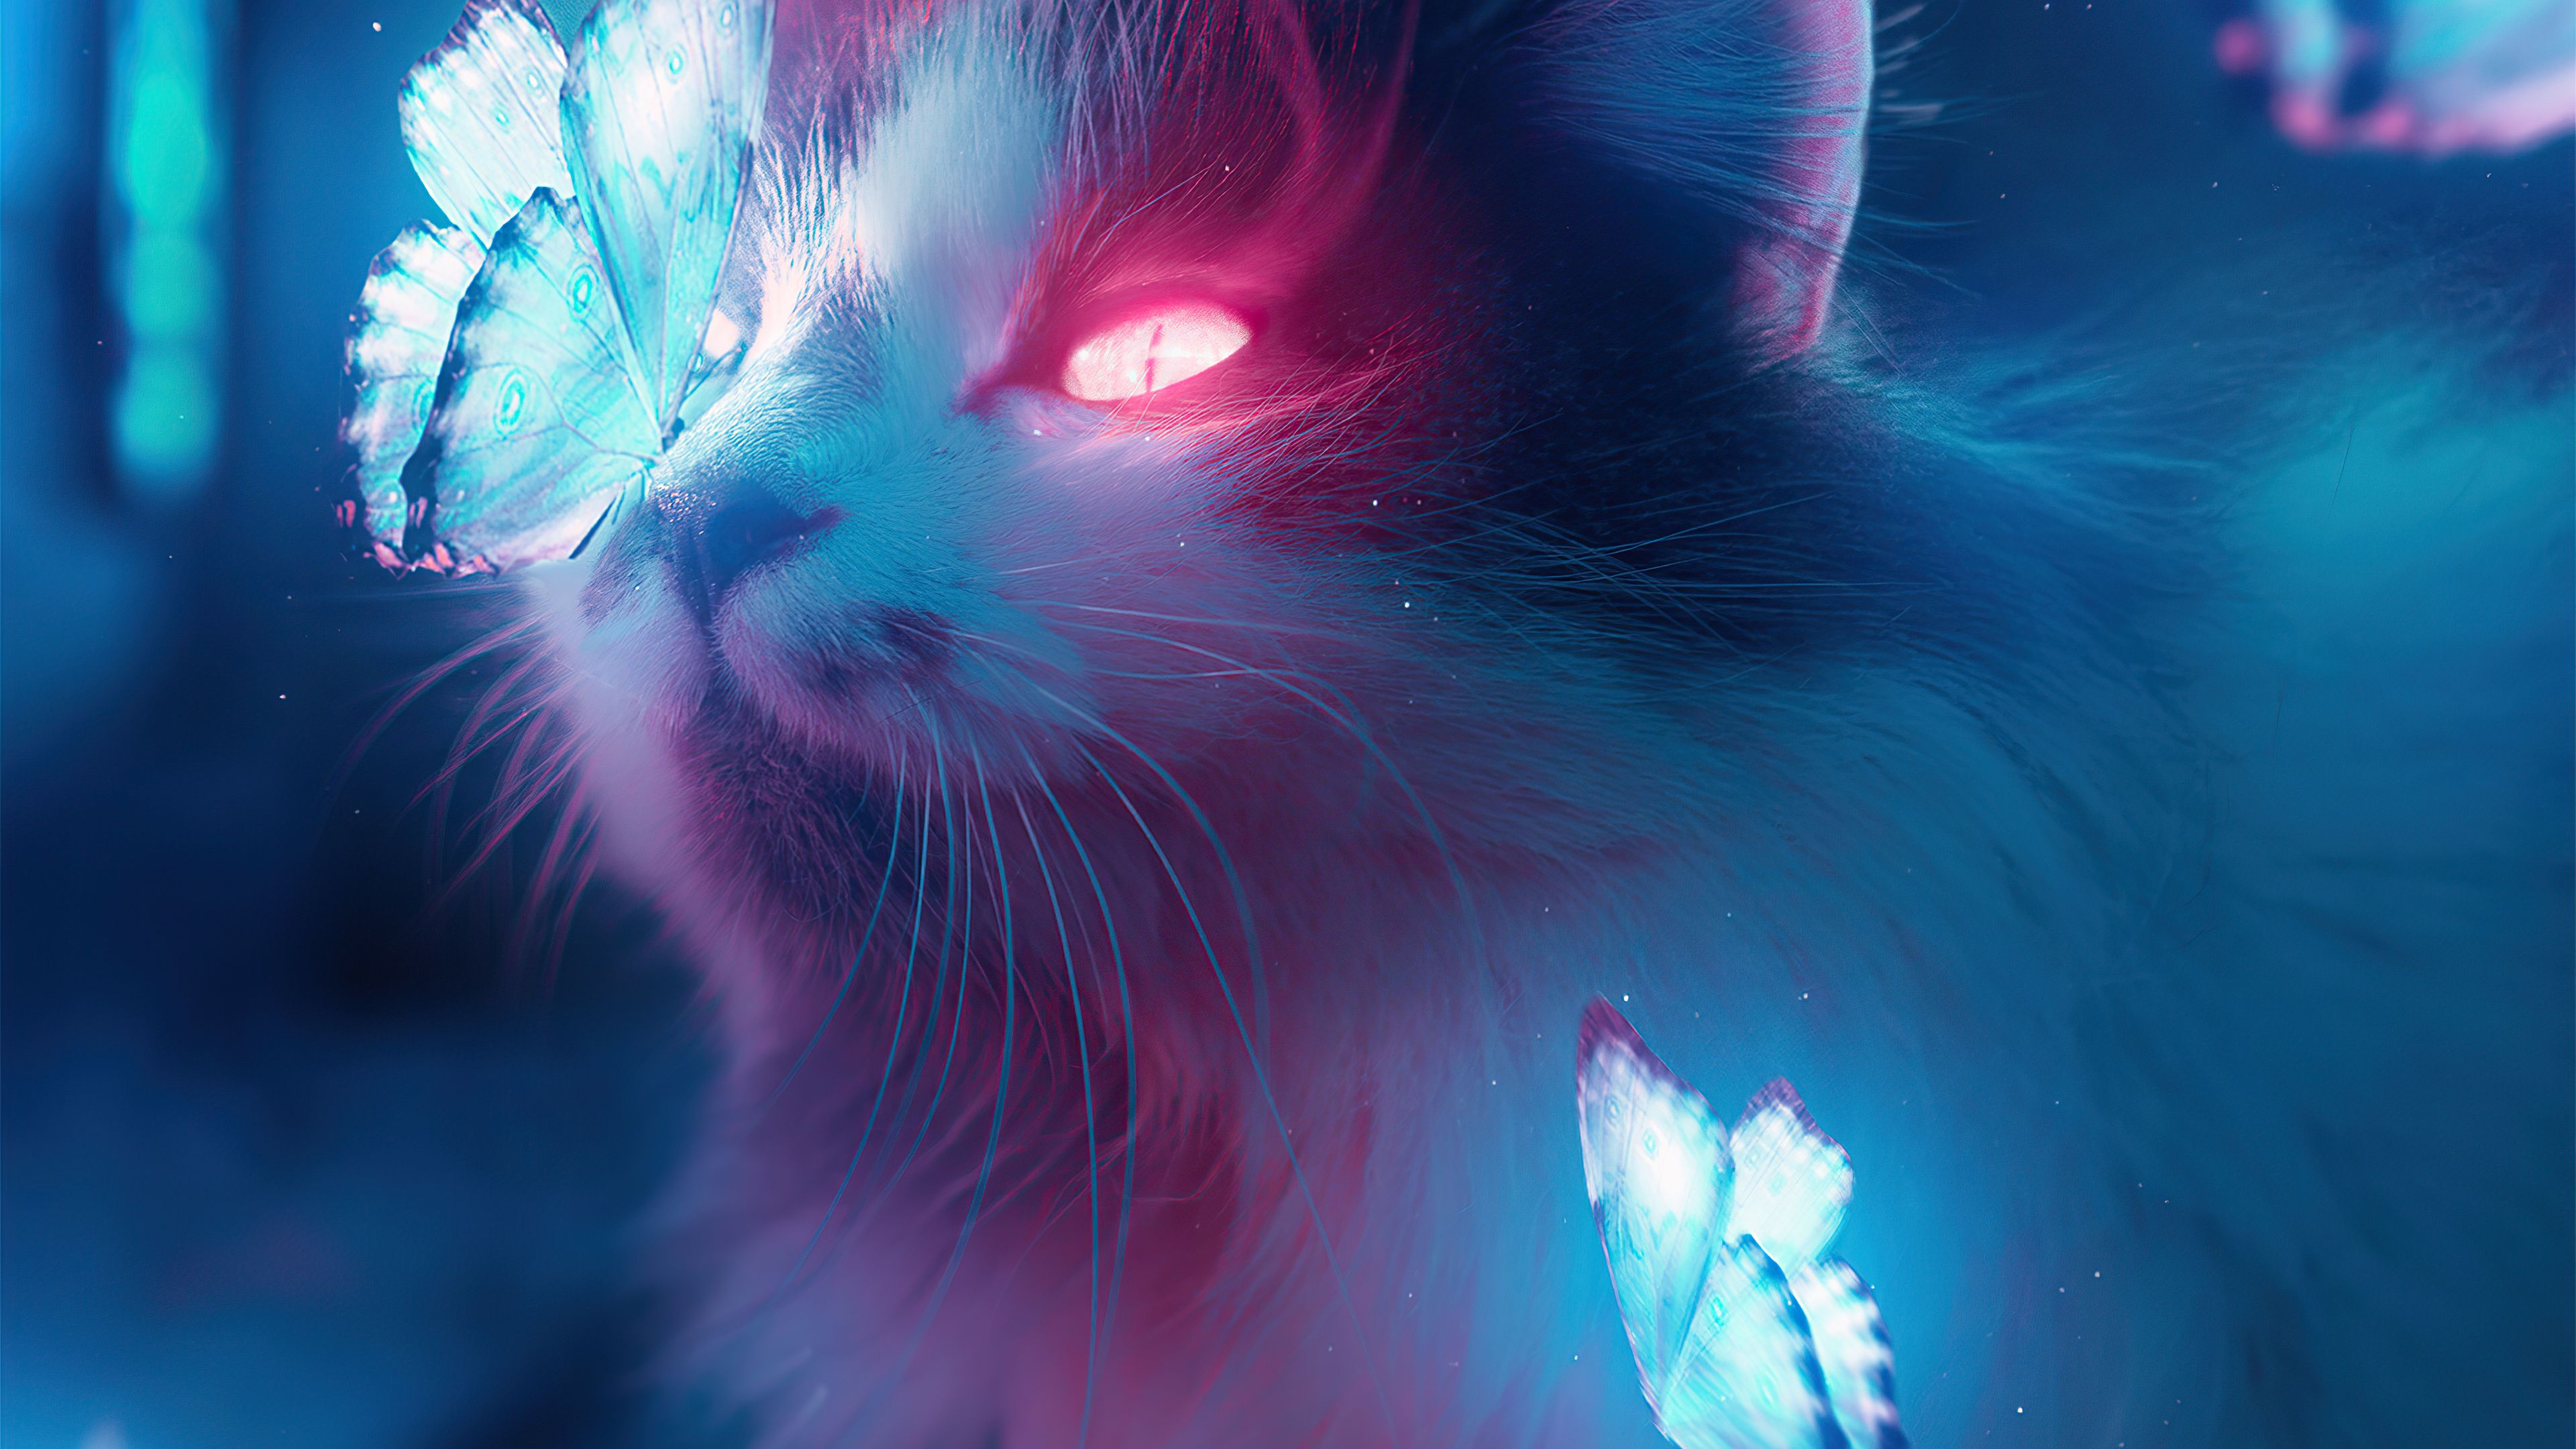 Cat Bladerunner Art 4k, HD Artist, 4k Wallpaper, Image, Background, Photo and Picture